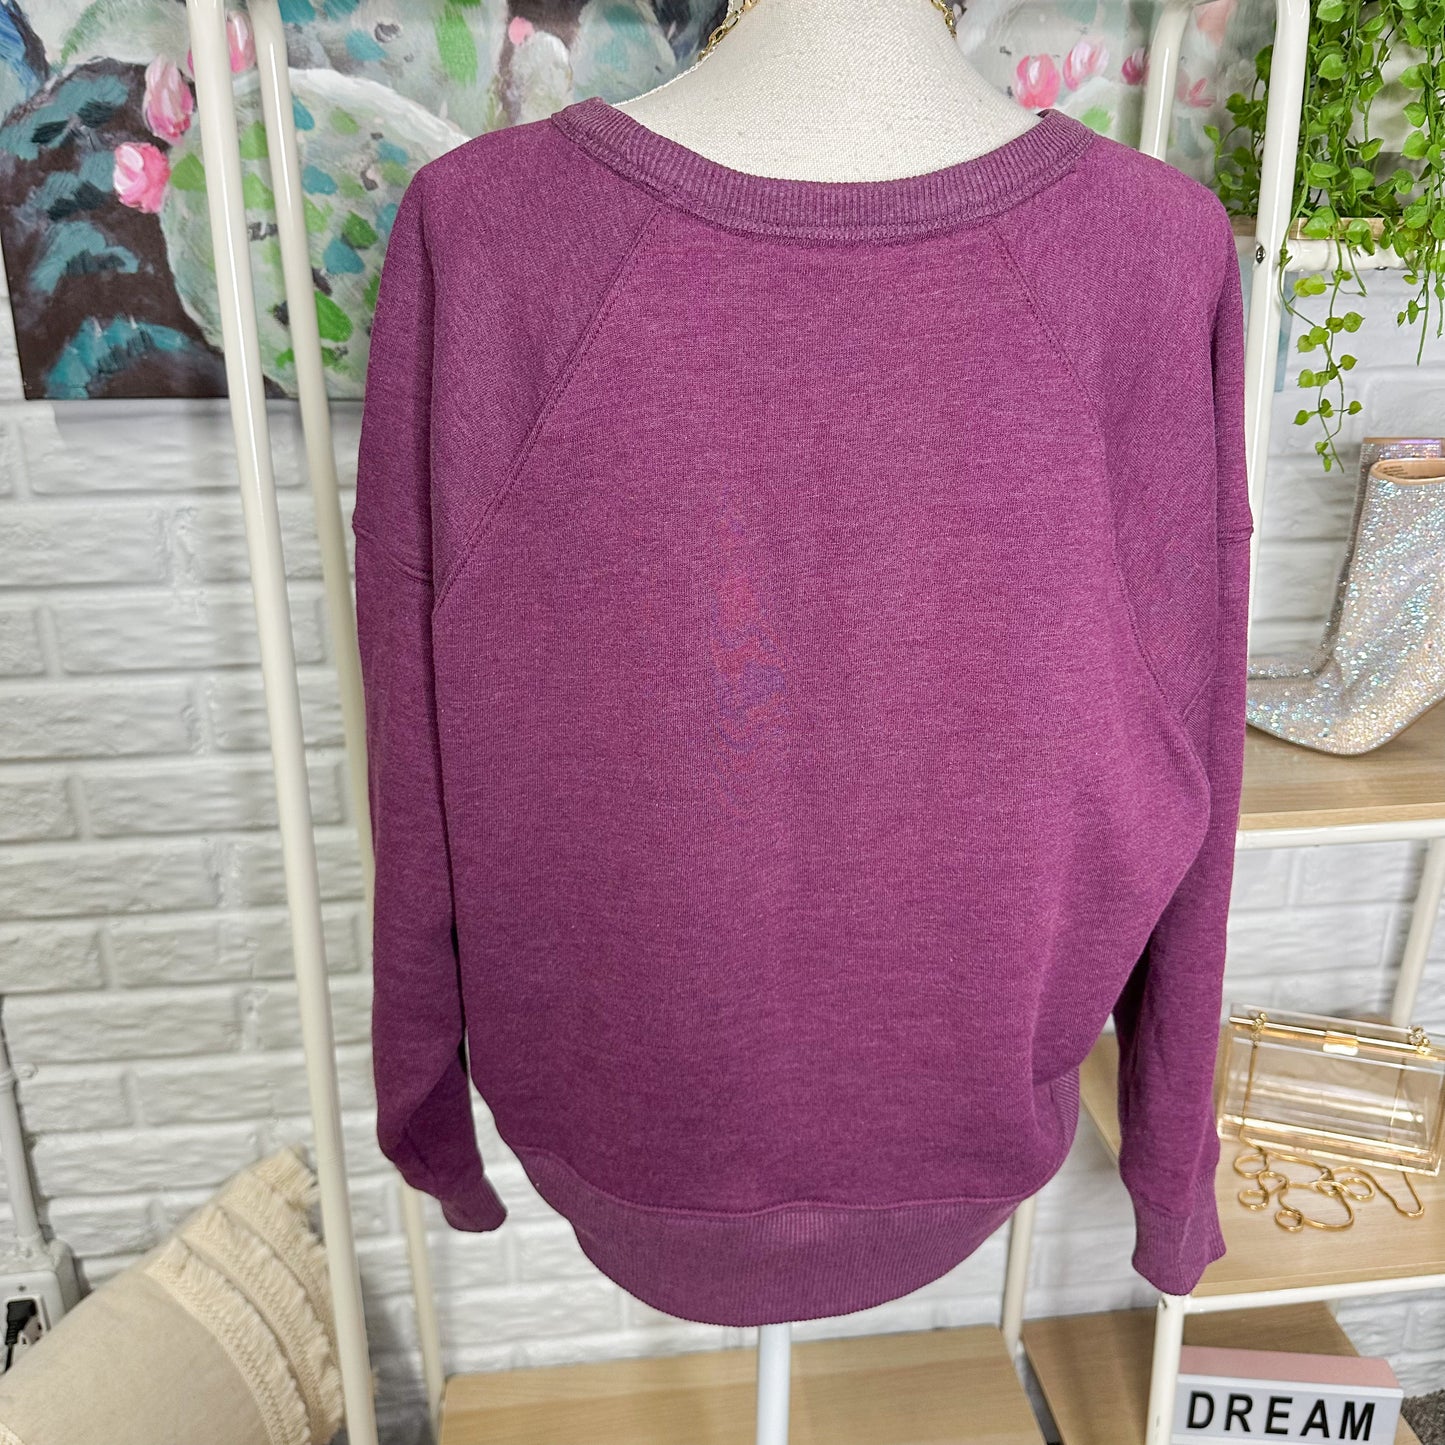 Lou & Grey West Coast Fleece Sweater Size XS